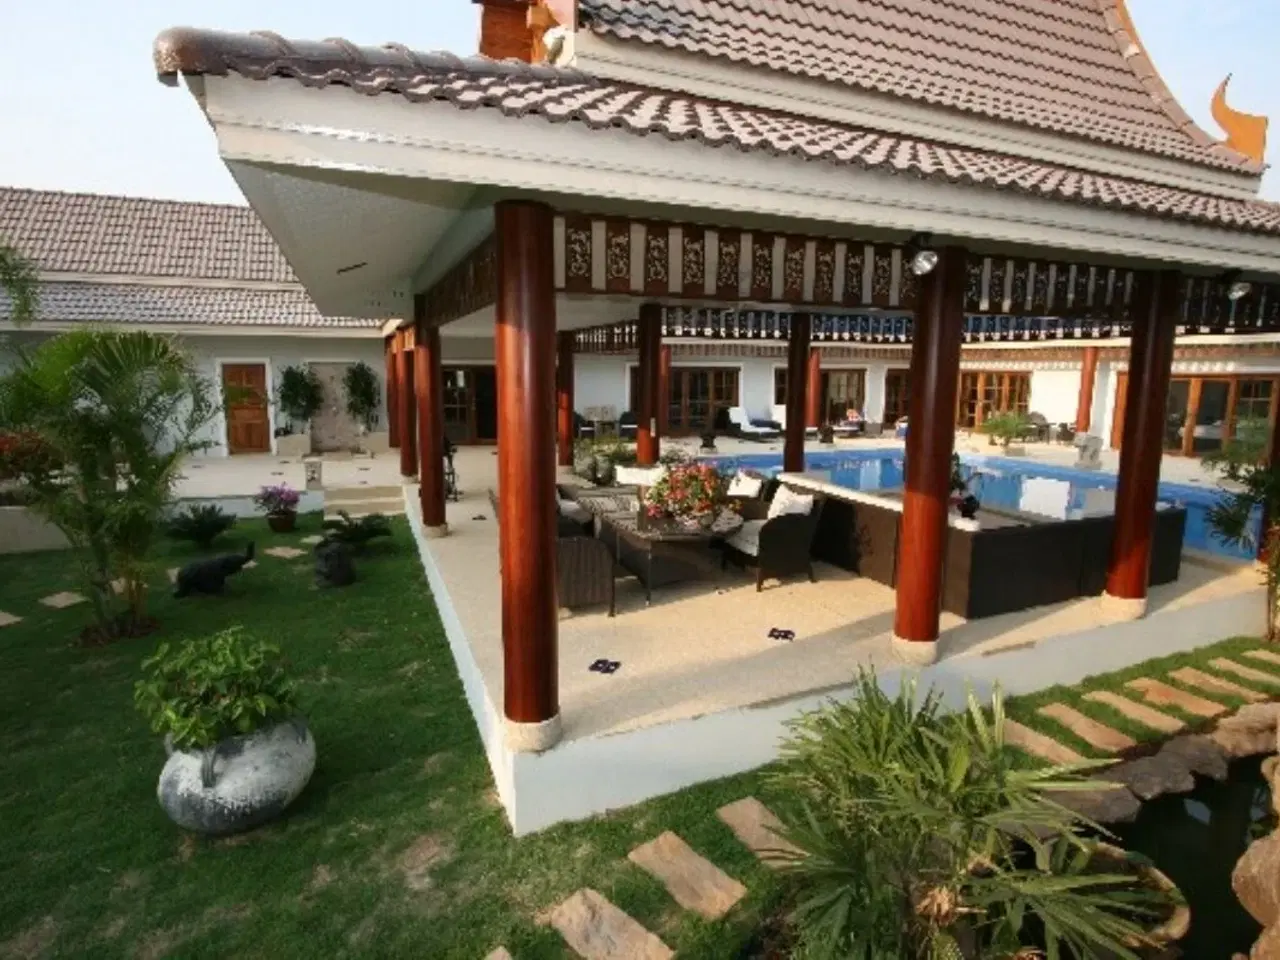 Billede 4 - Lej bolig i Hua Hin Thailand, Pool villa